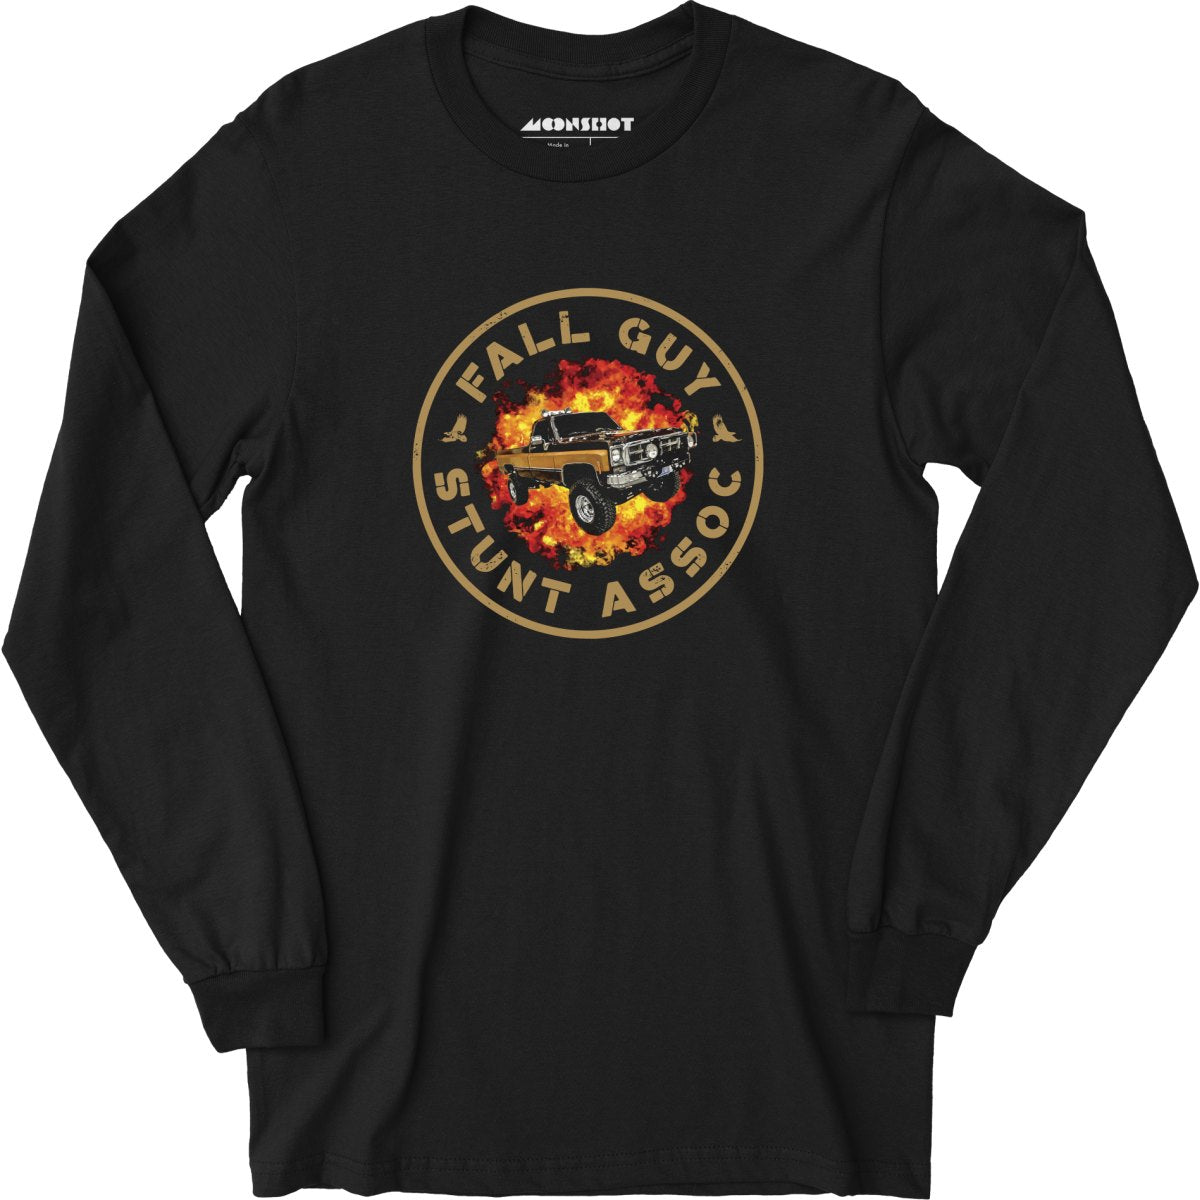 Fall Guy Stunt Association - Long Sleeve T-Shirt